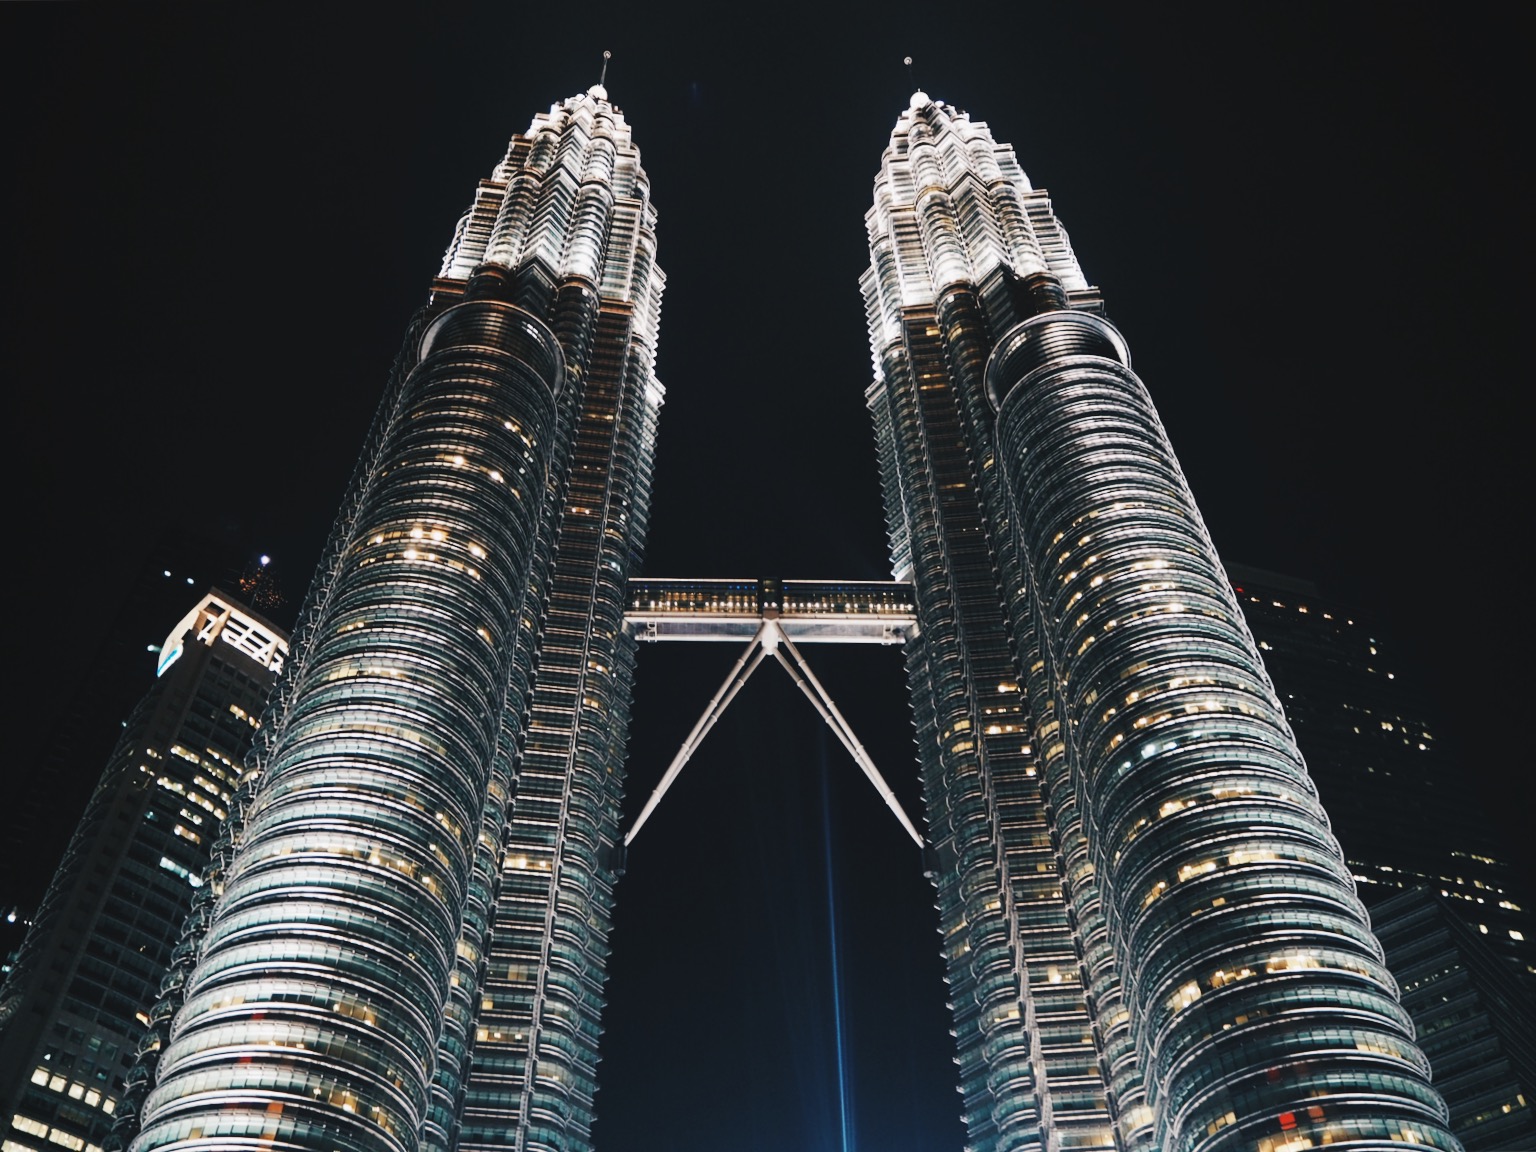 The Petronas Towers in Kuala Lumpur after dark